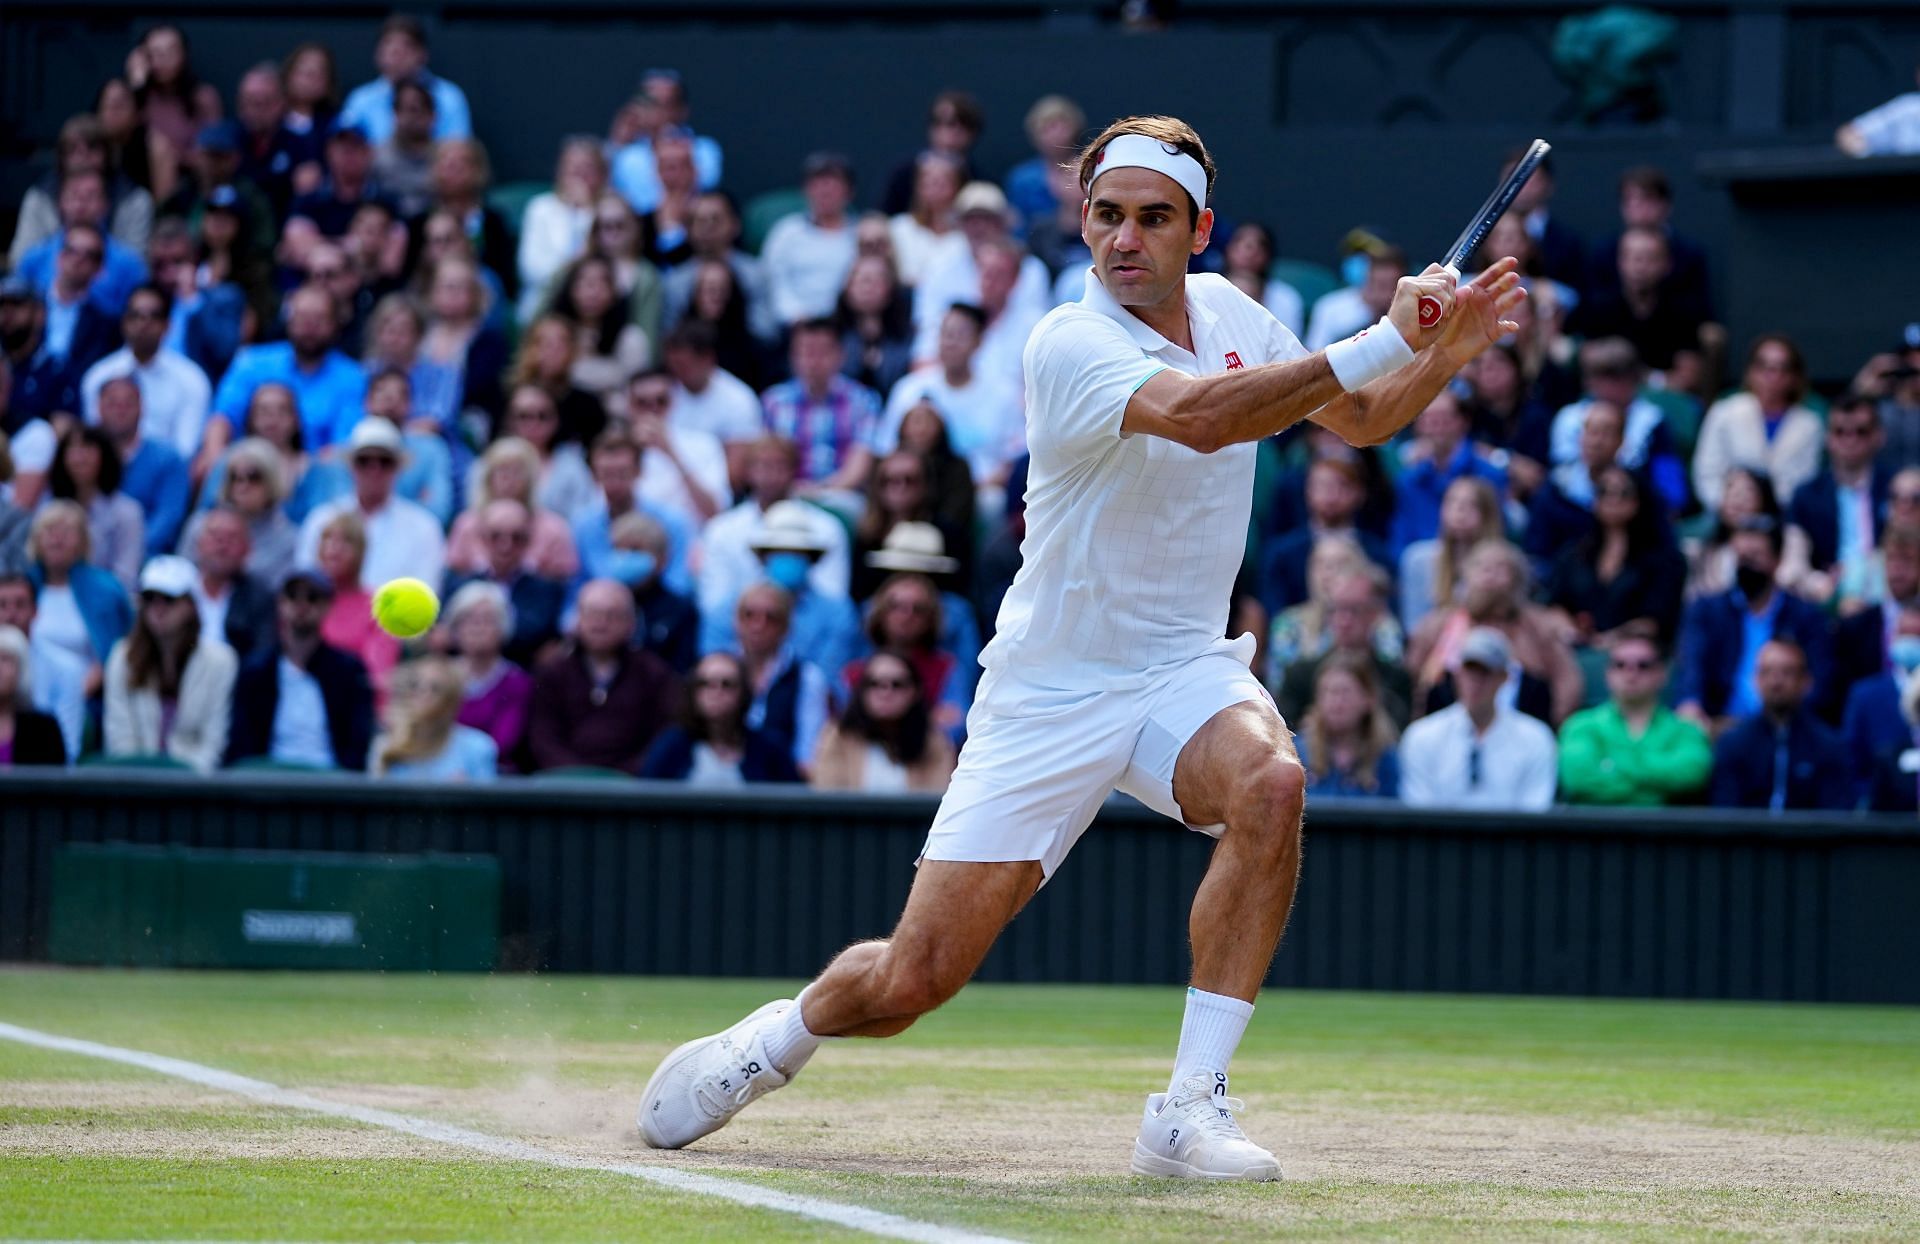 Roger Federer at the Wimbledon Championships 2021